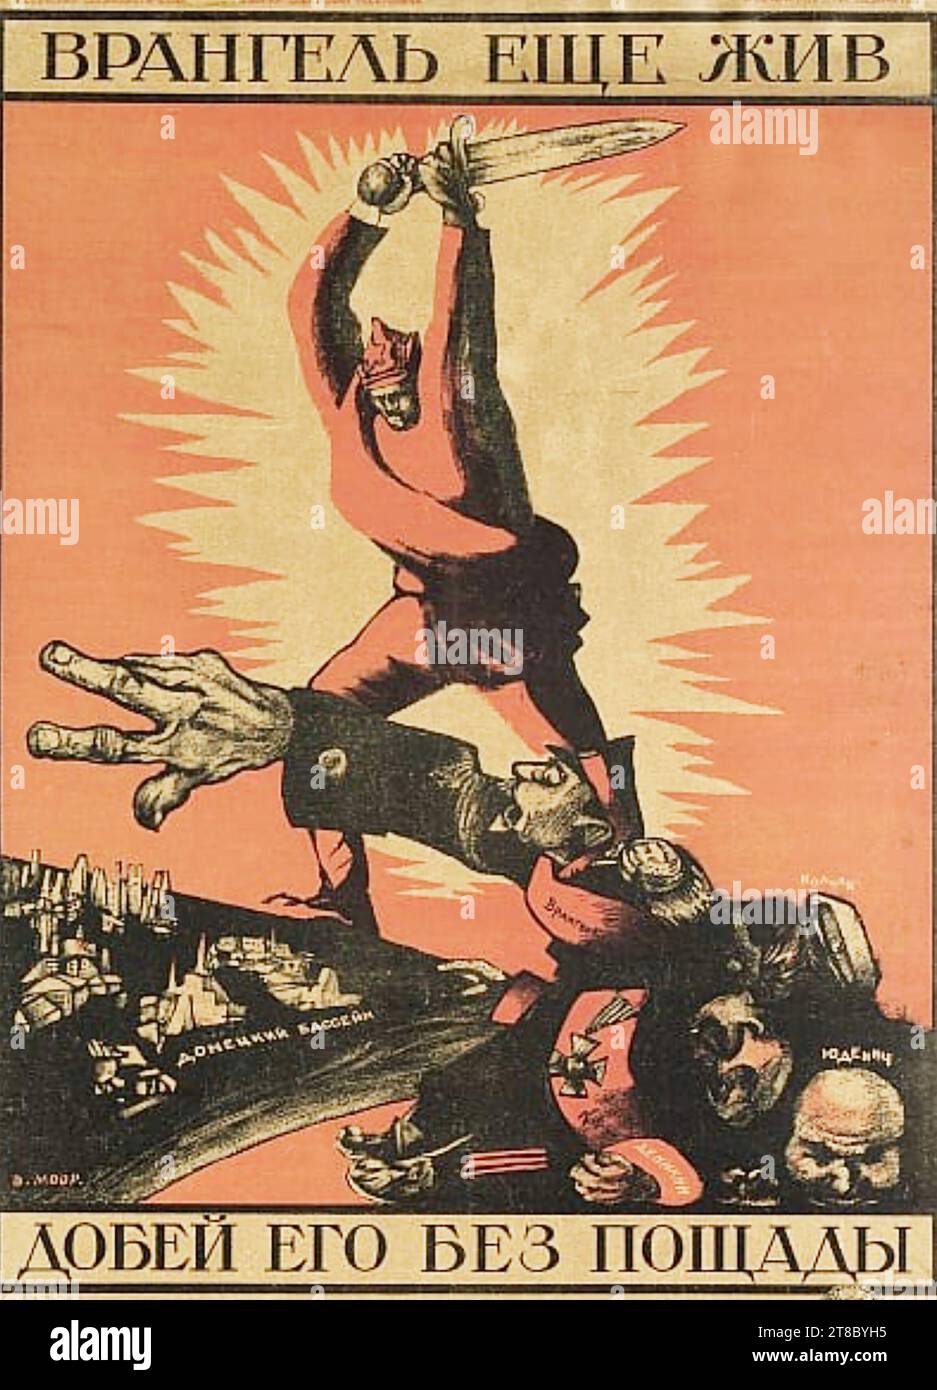 DMITRY MOOR (1883-1946) Russian artist  and poster designer. 'Wrangel still lives. Let's finish him off !'  A reference to Pyotr Wrangel an aniti-Bolshevik commander in the Russian Civil War. Stock Photo